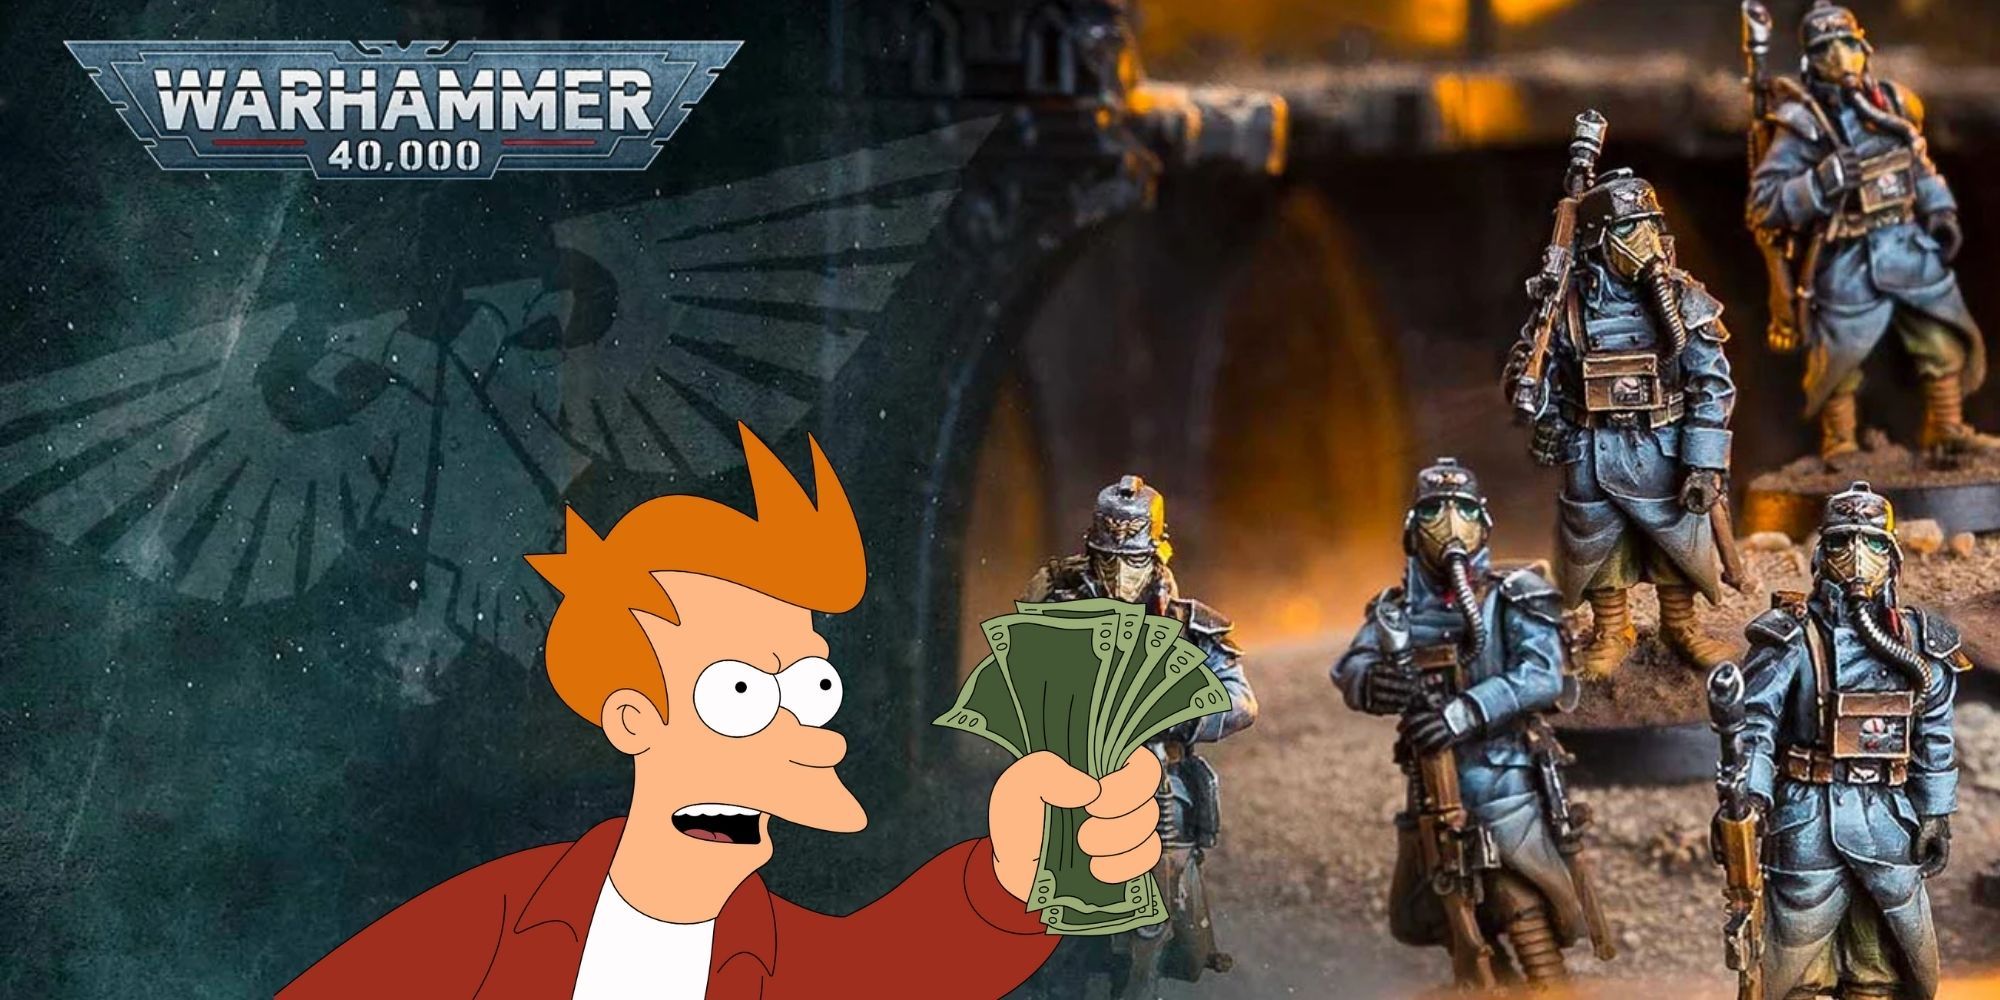 Cómo jugar Warhammer 40k sin gastar mucho dinero